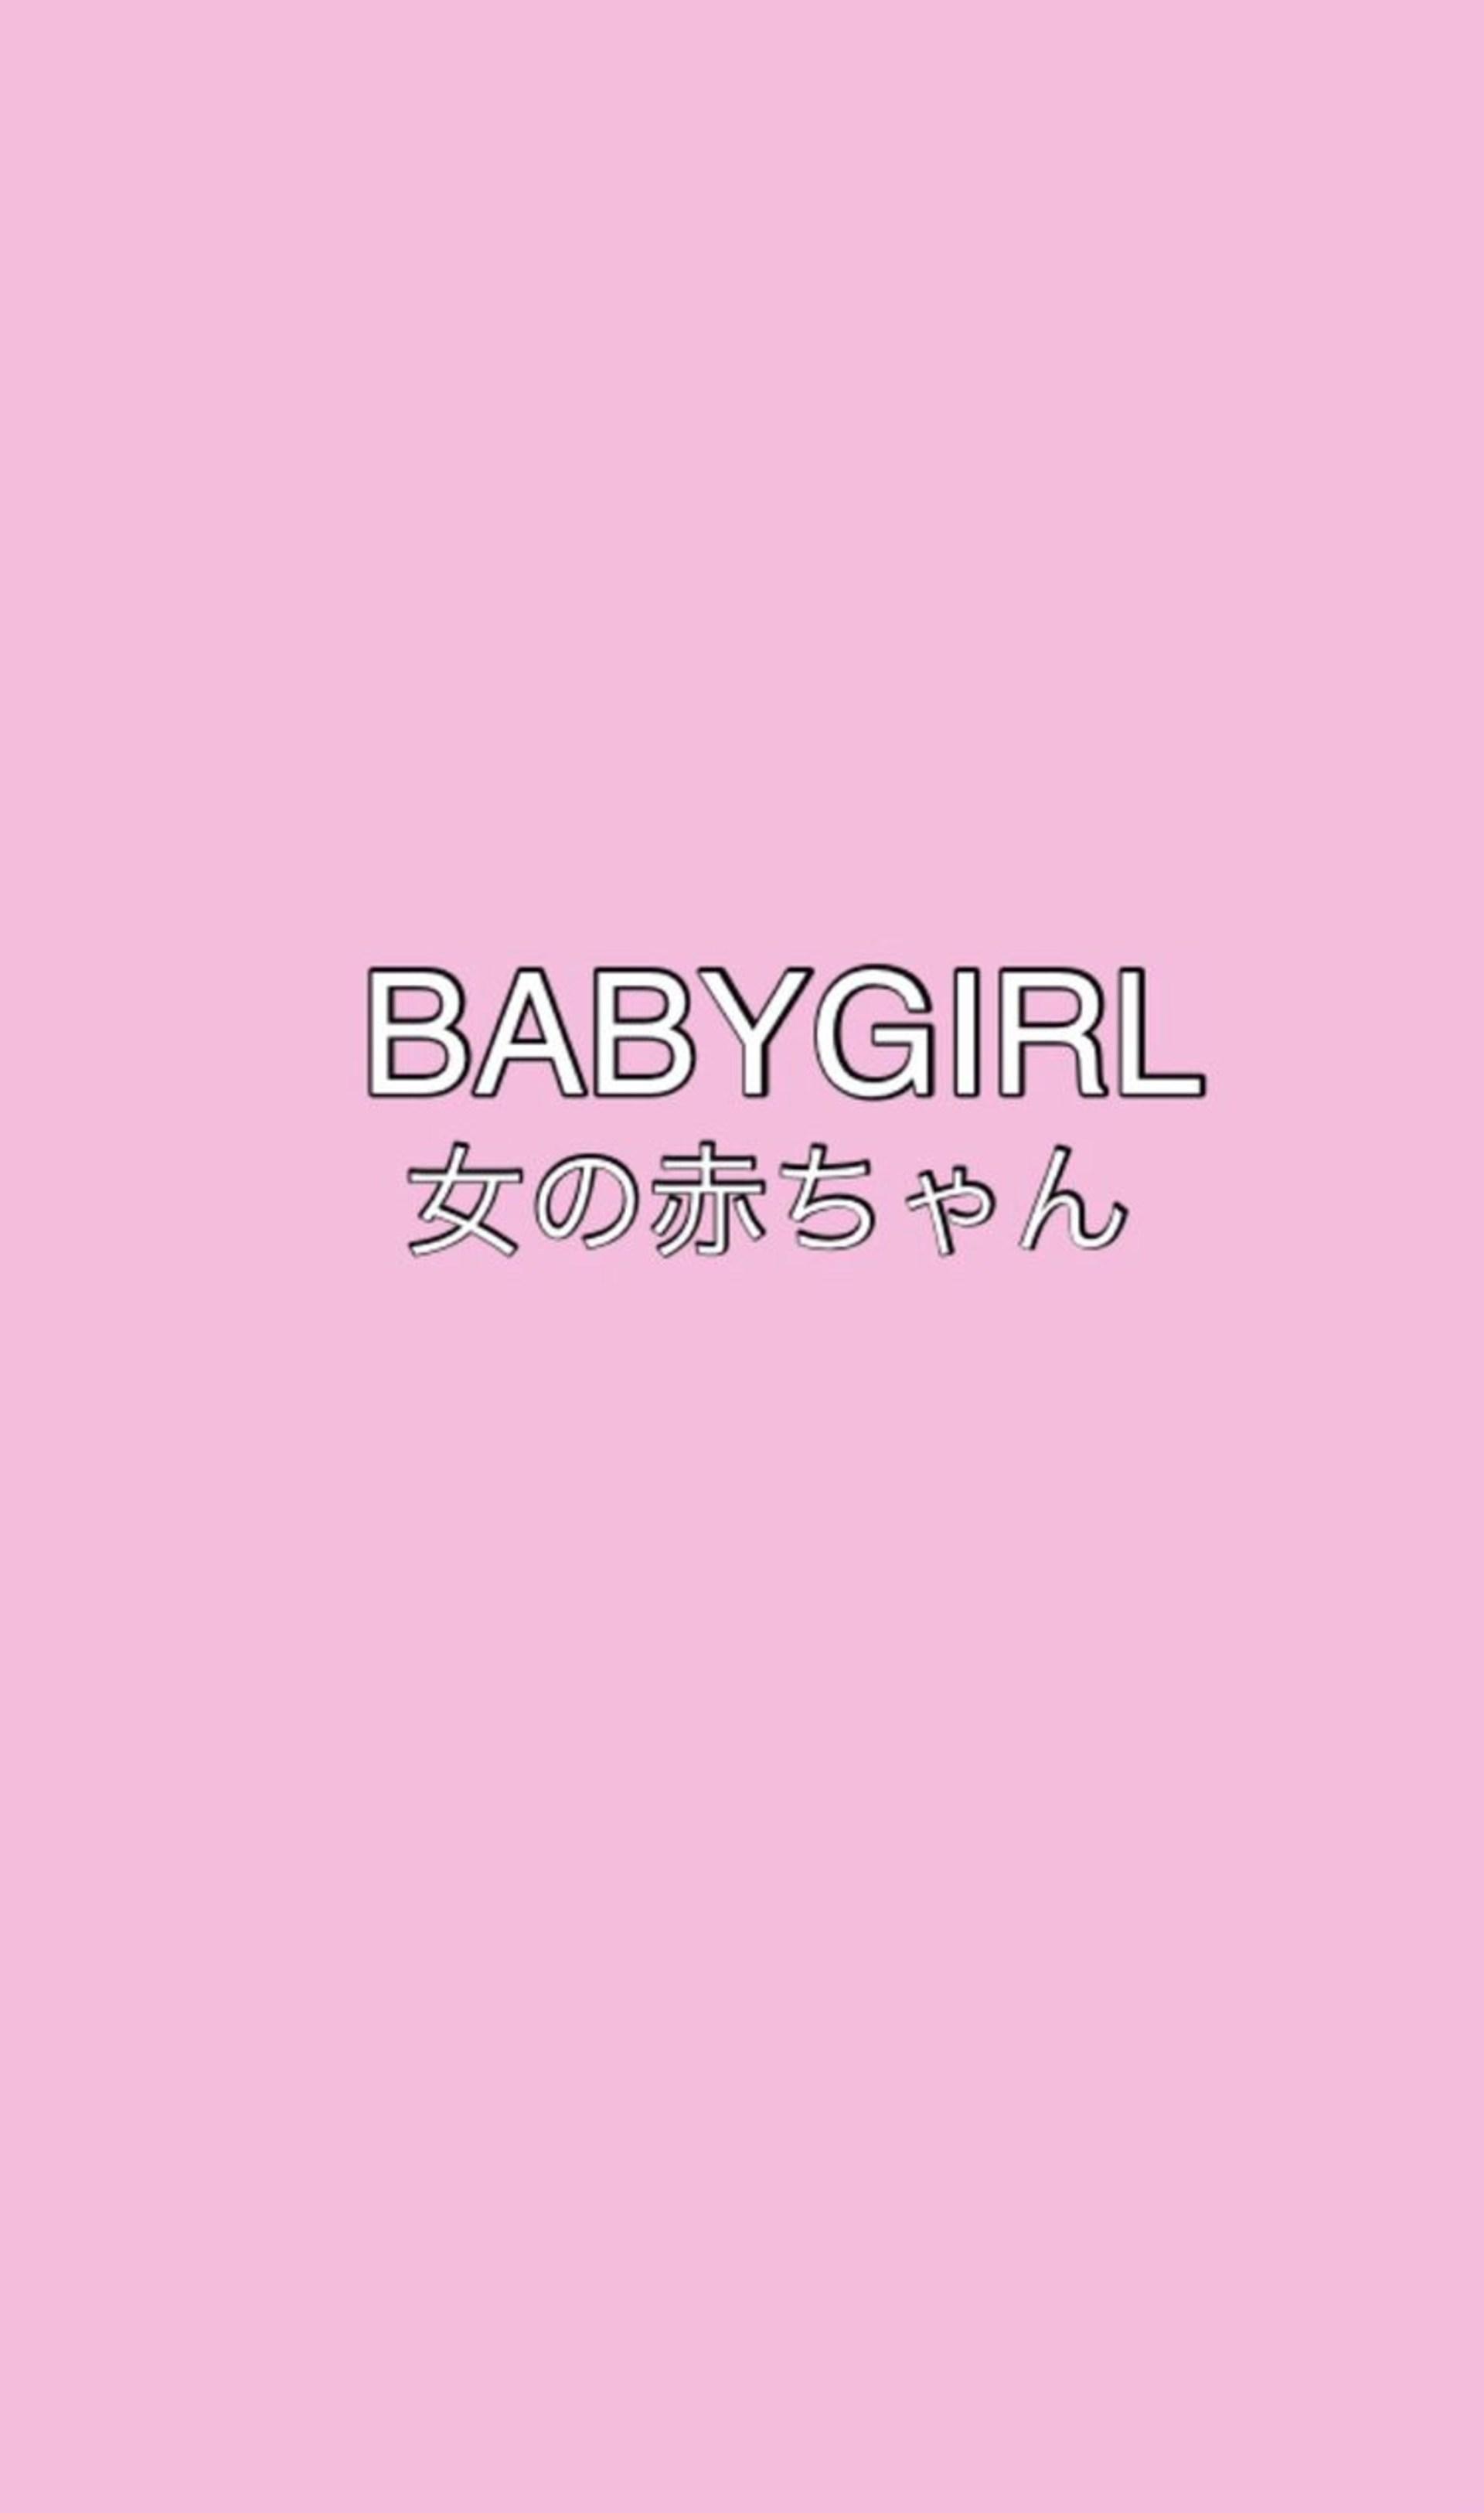 #wallpaper #phone #babygirl #pink #background #japanese